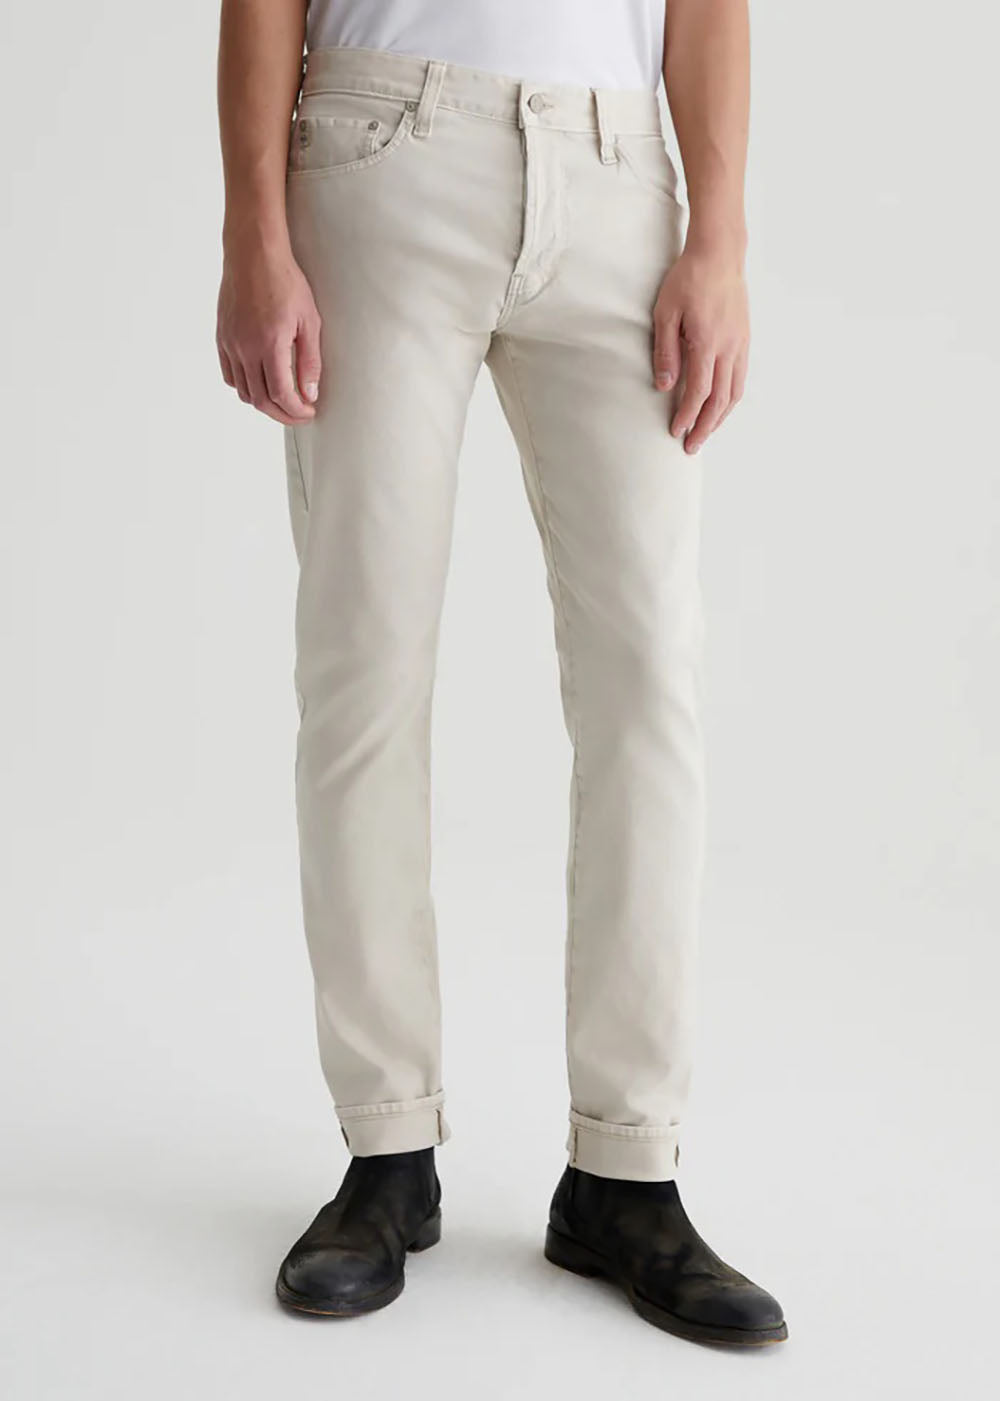 Tellis Modern Slim Jean - Sulfur Sienna Sand - AG Jeans Canada - Danali - 1783SSPSLSSSD